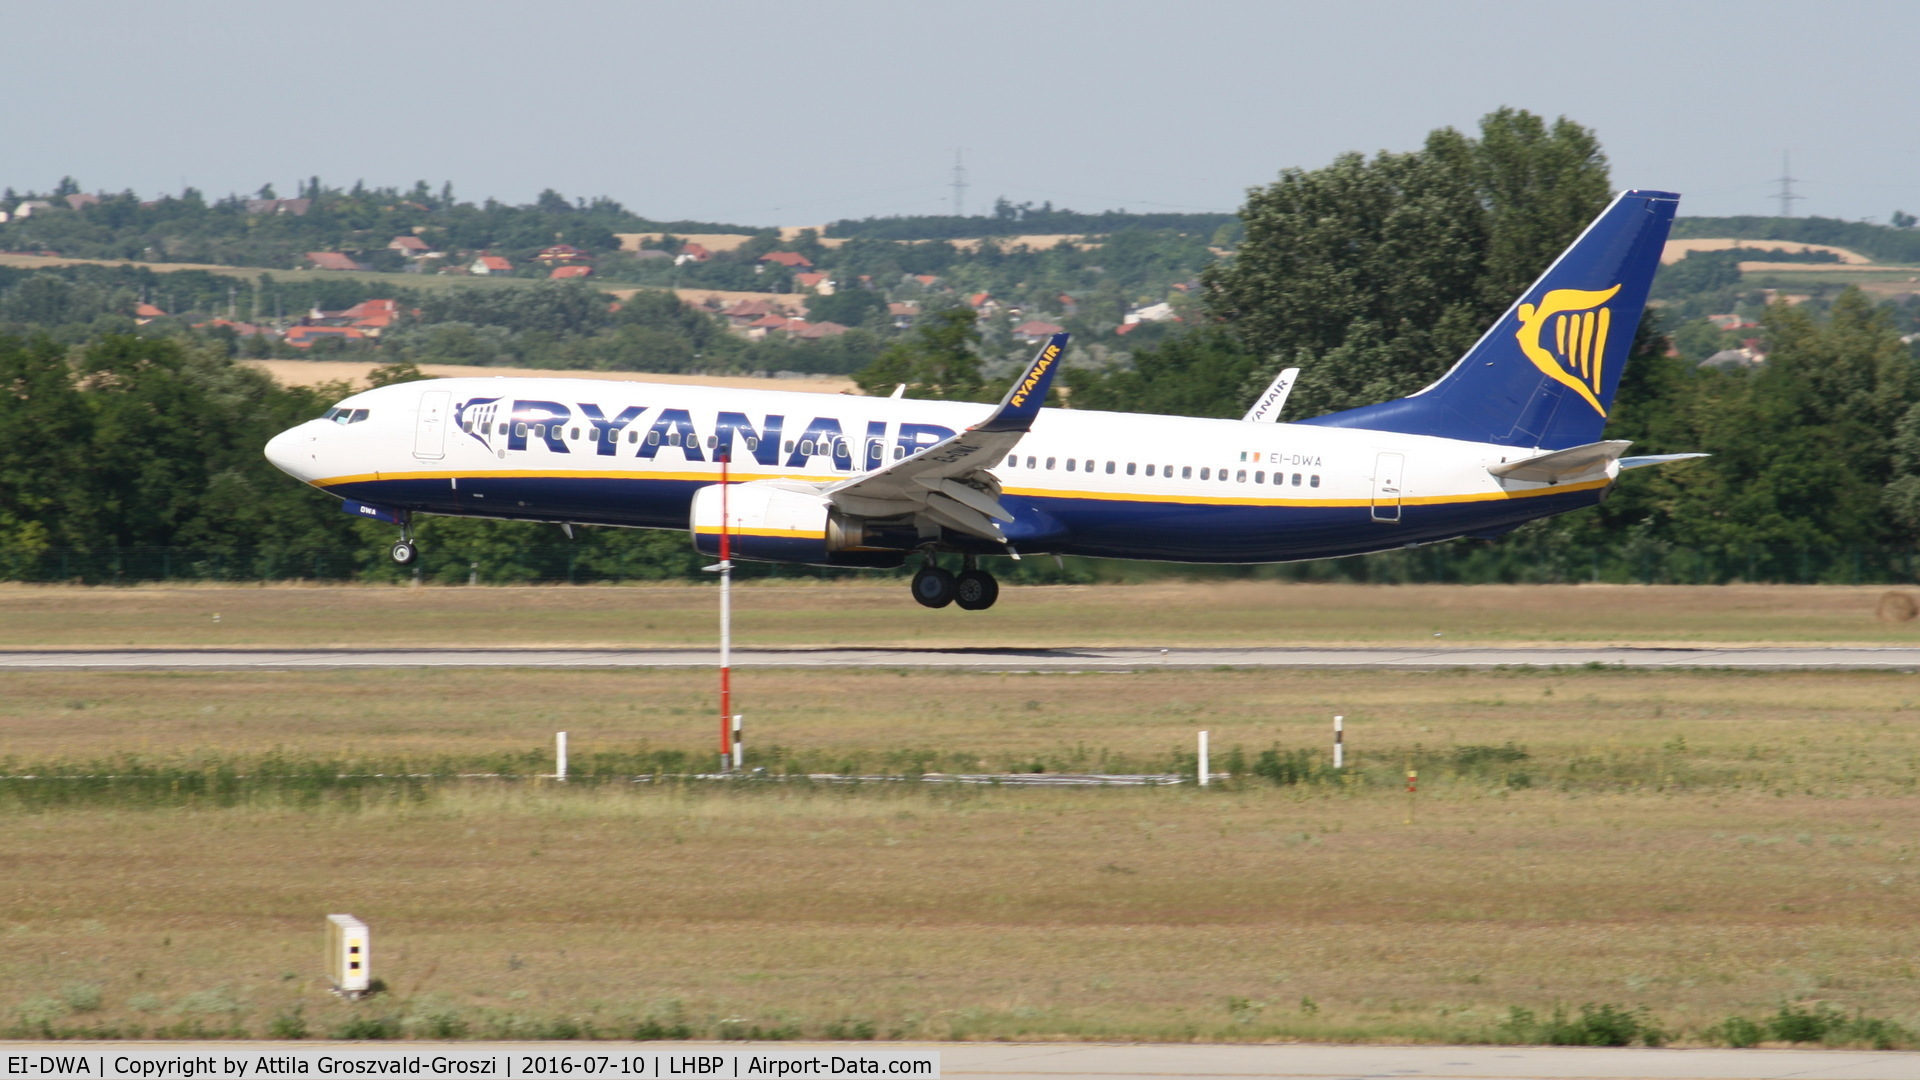 EI-DWA, 2007 Boeing 737-8AS C/N 33617, Budapest Airport, Hungary - Landing